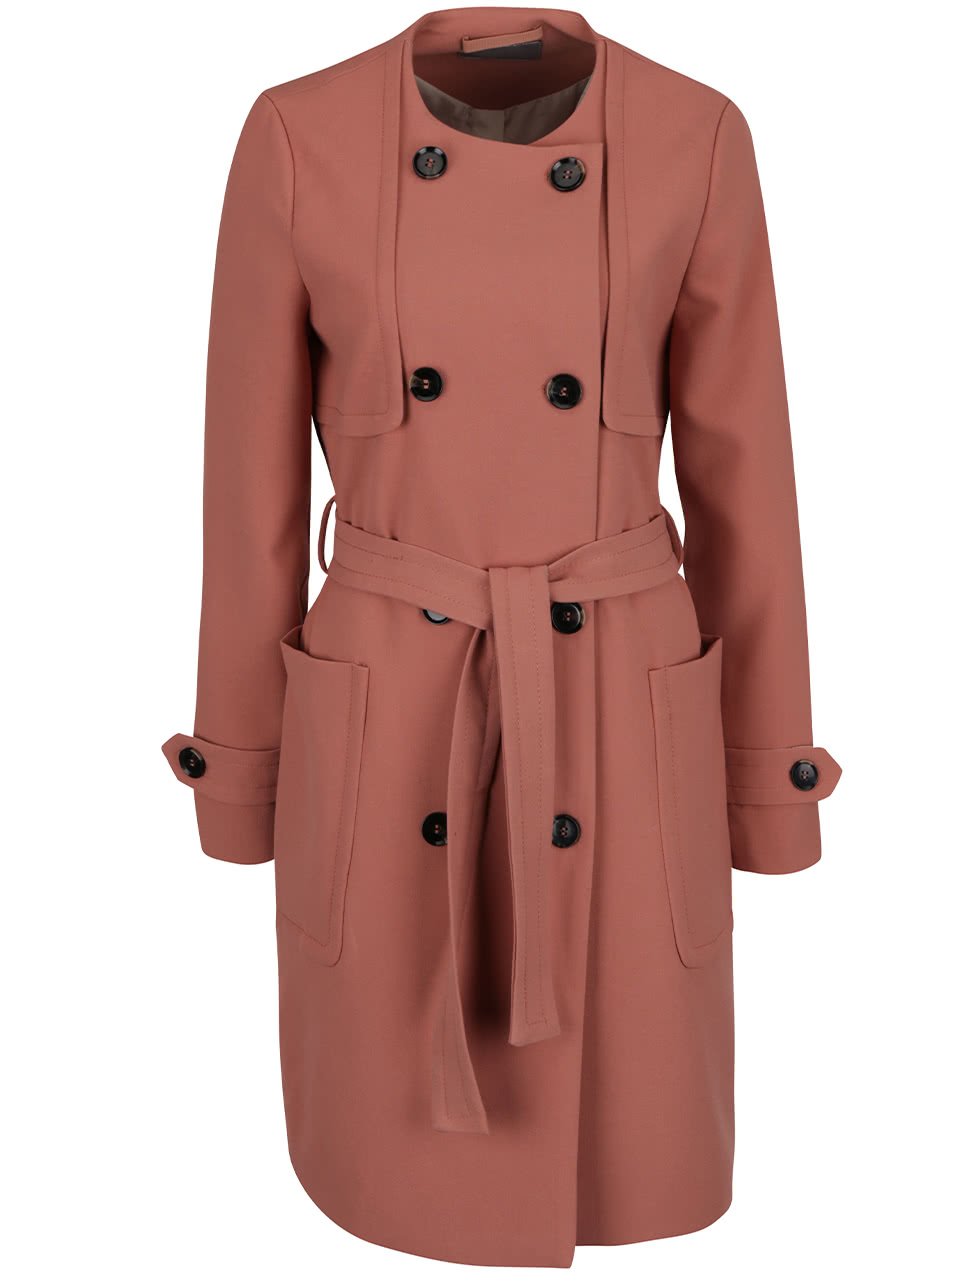 Starorůžový kabát s dvouřadým zapínáním a hlubokými kapsami Vero Moda Janna